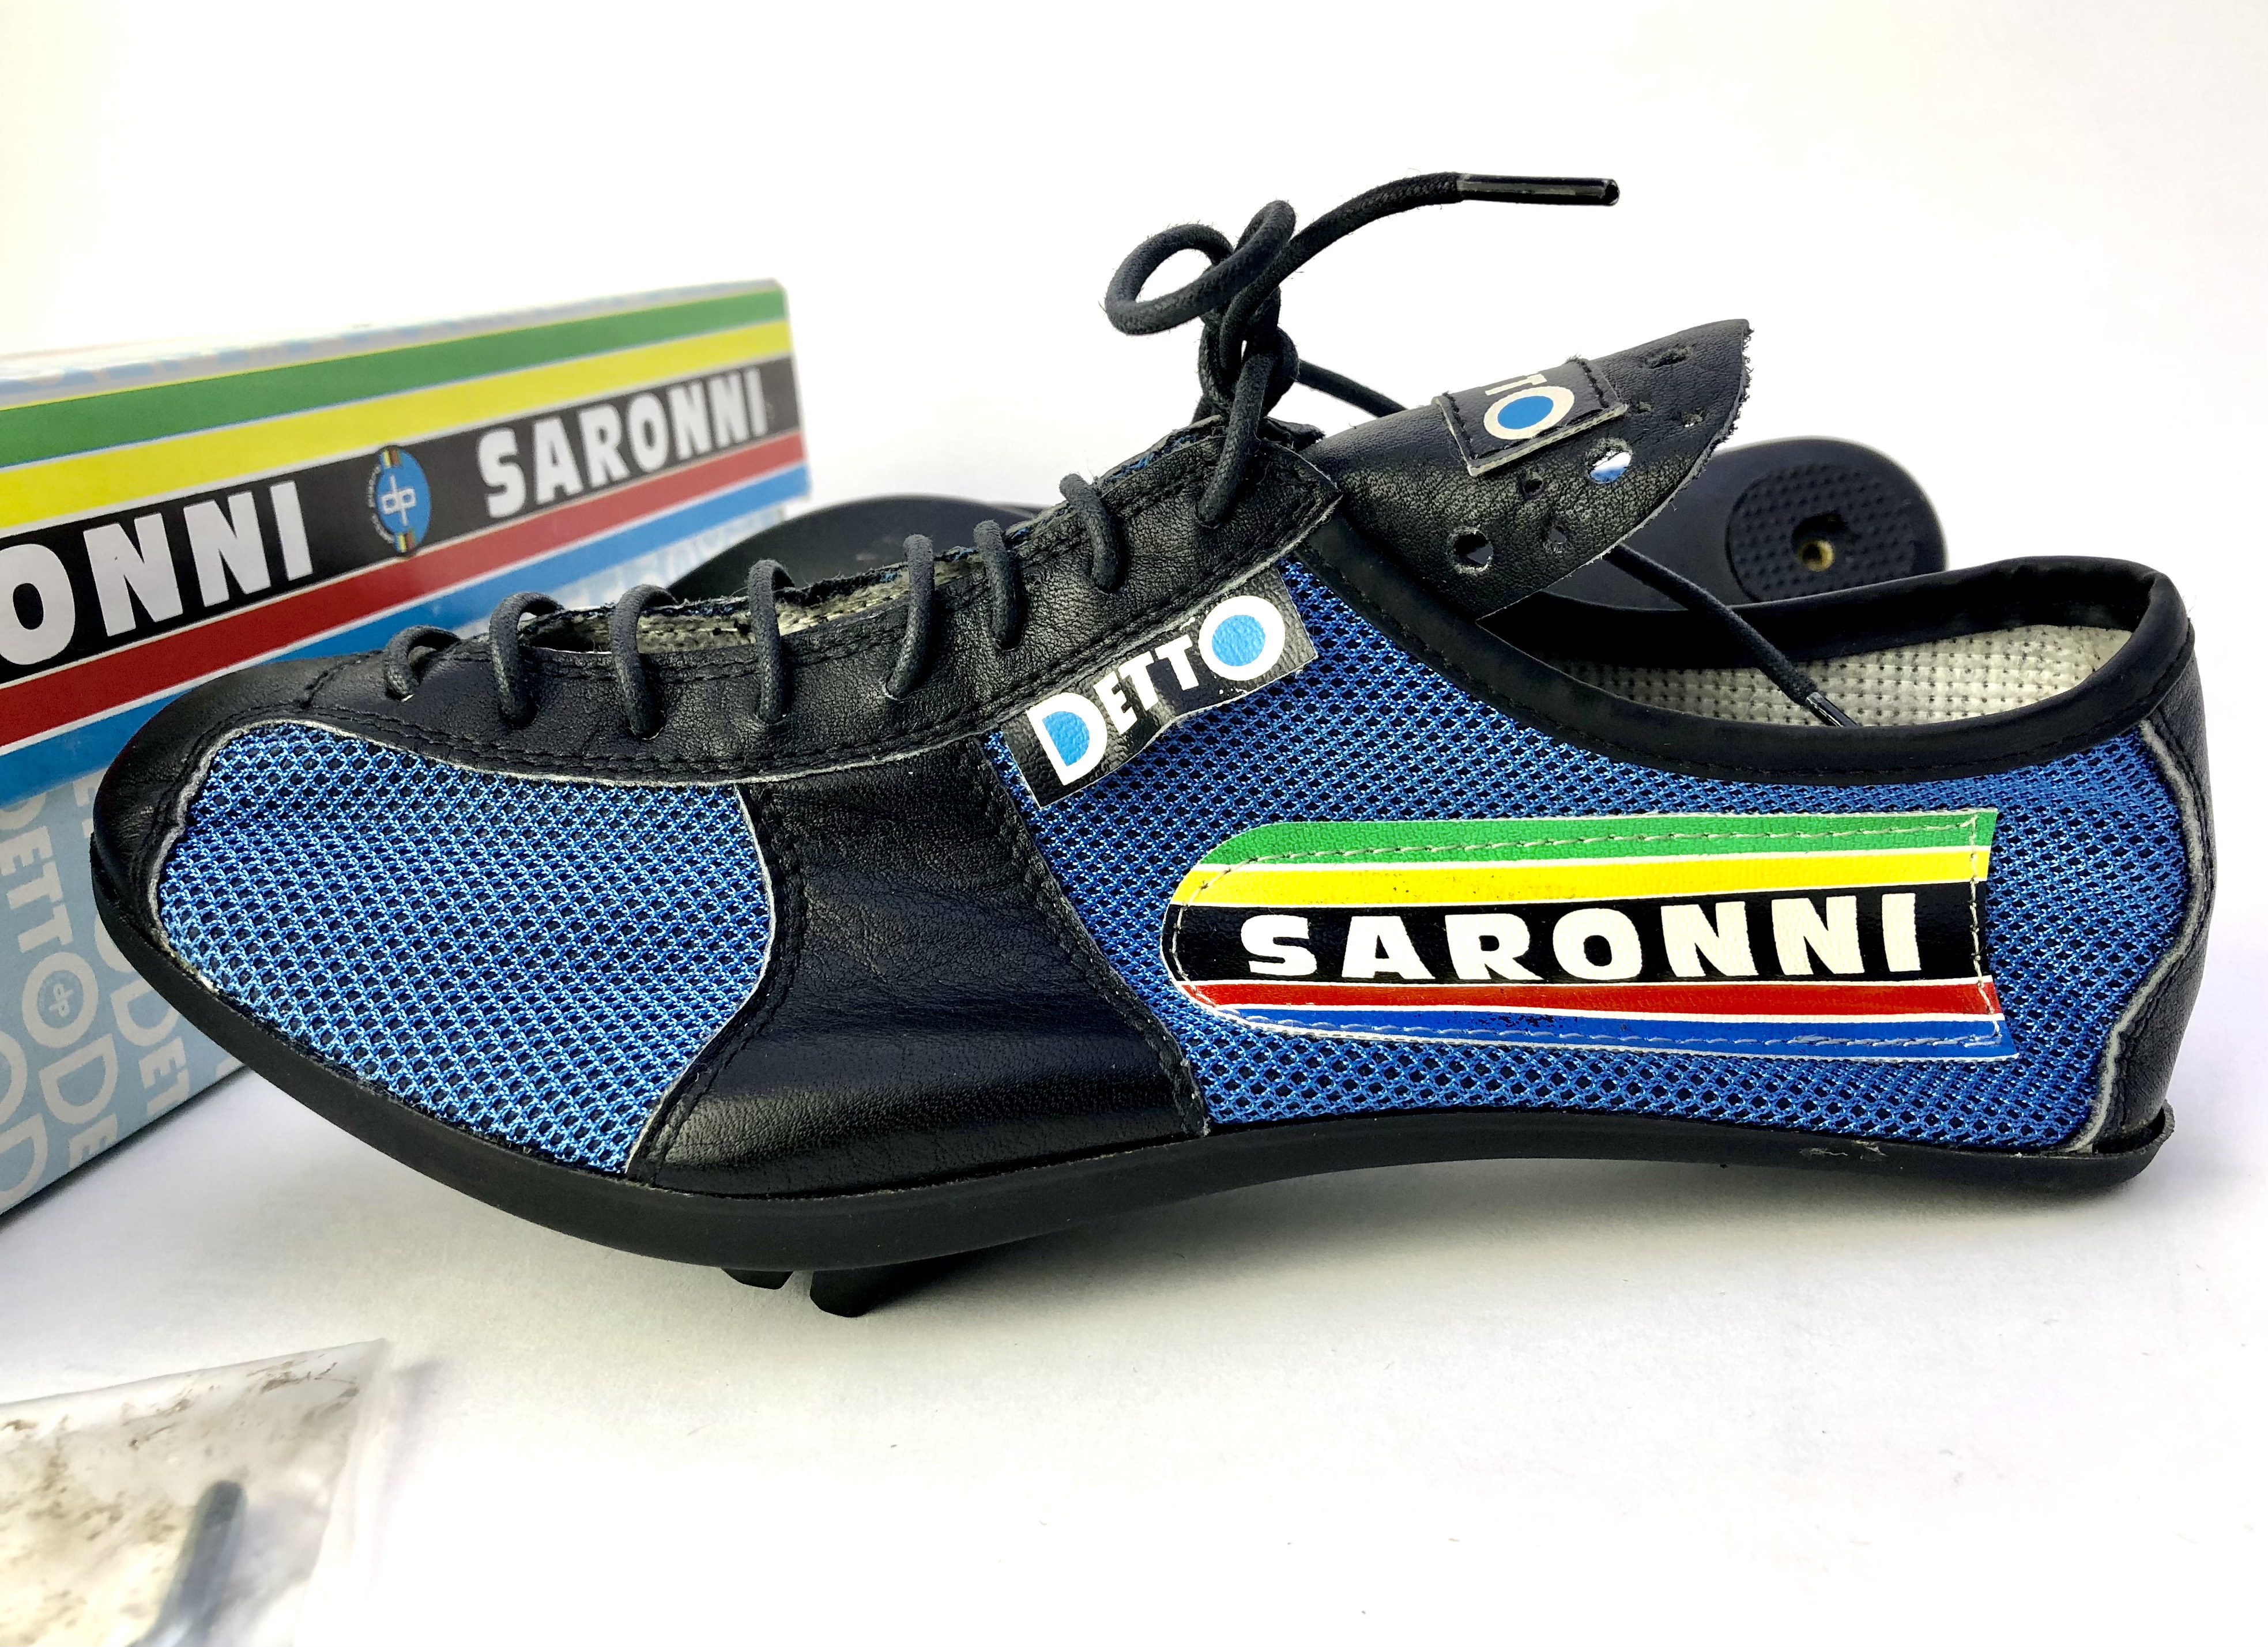 NOS Vintage Saronni di Detto Pietro Cycling Shoes Size 38